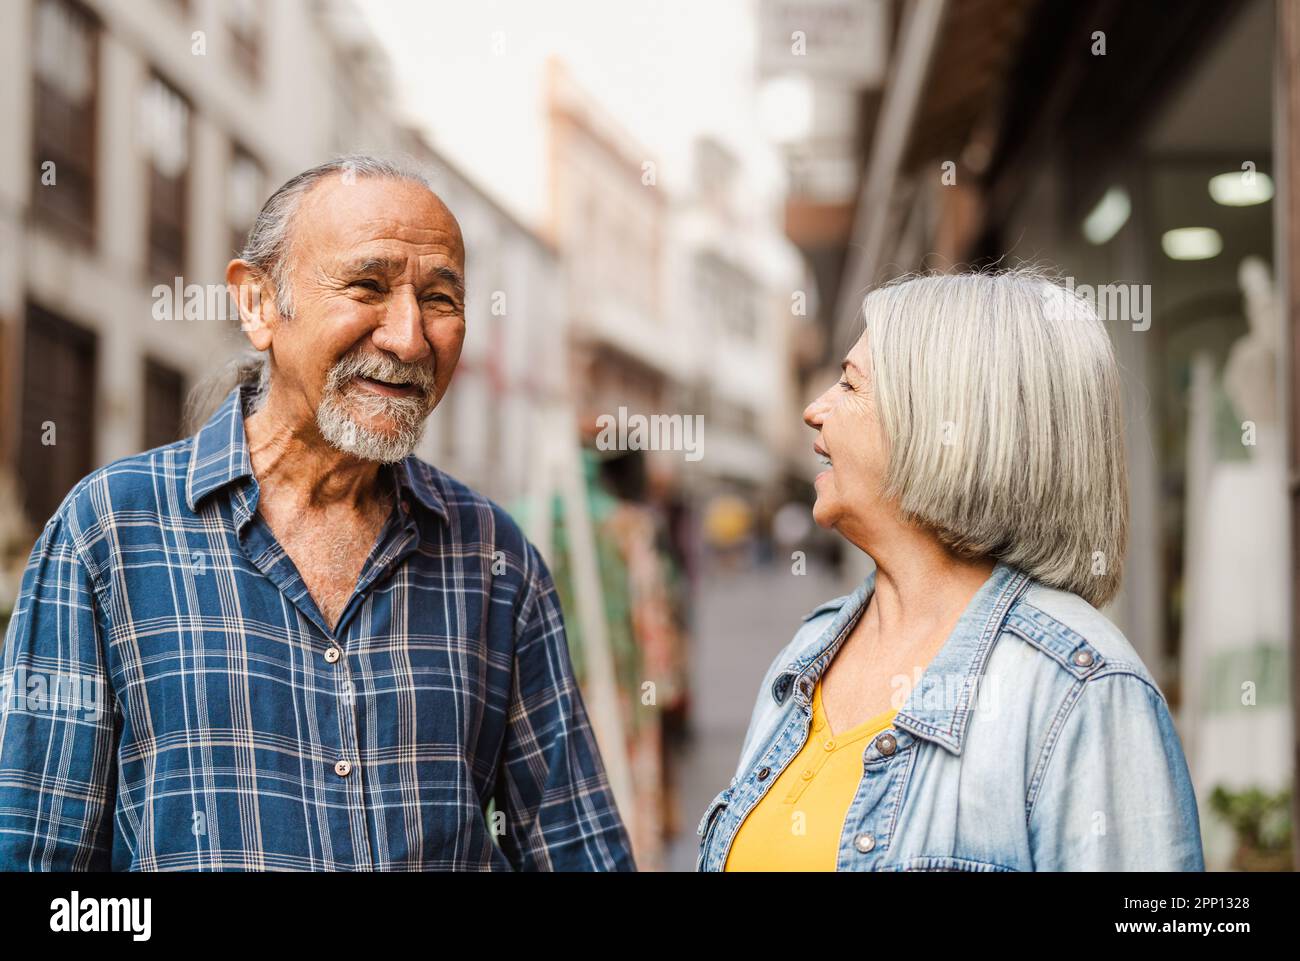 Happy senior couple having fun in city - Elderly people and love relationship concept Stock Photo